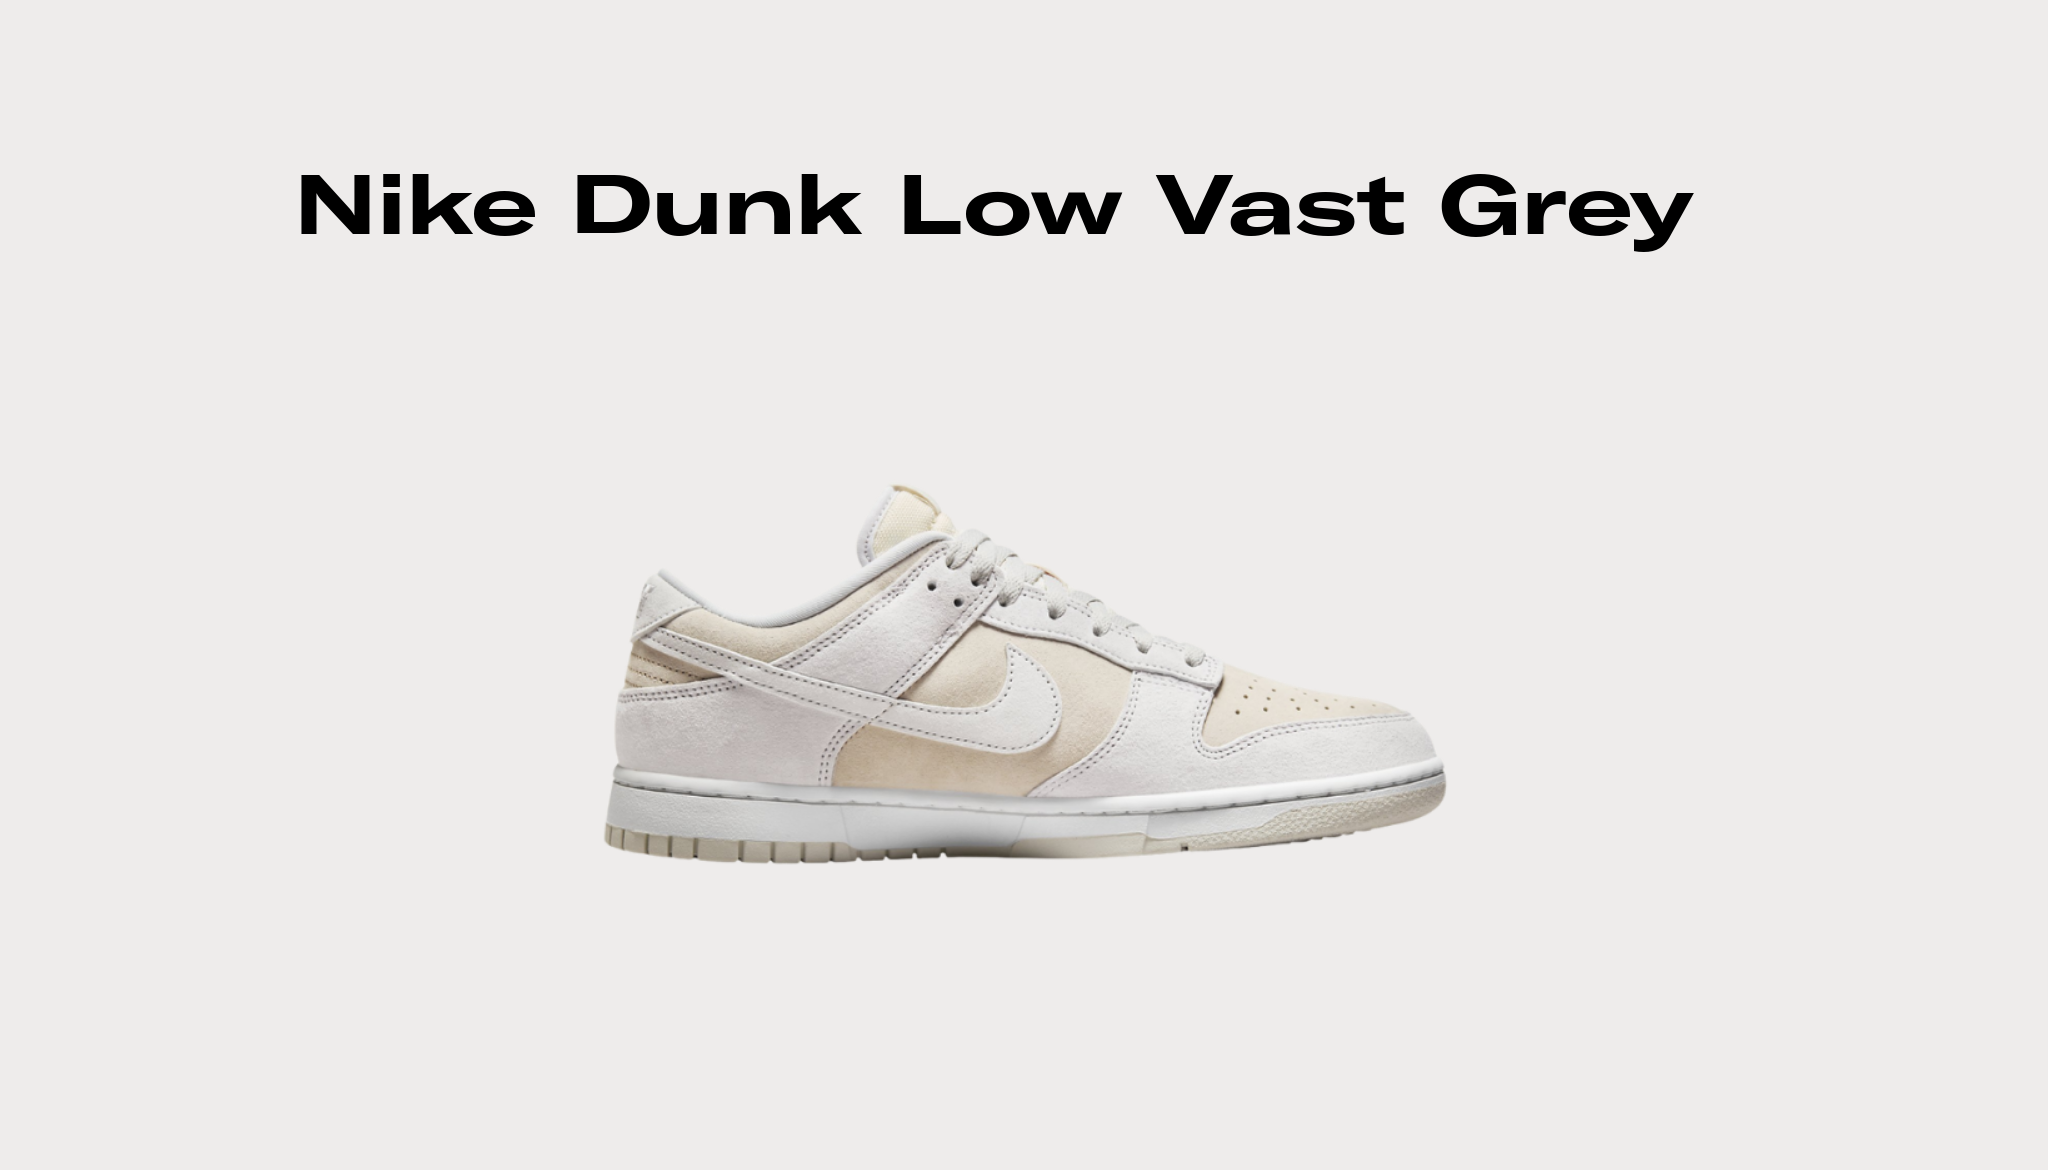 Nike Dunk Low Vast Grey, Raffles and Release Date | Sole Retriever